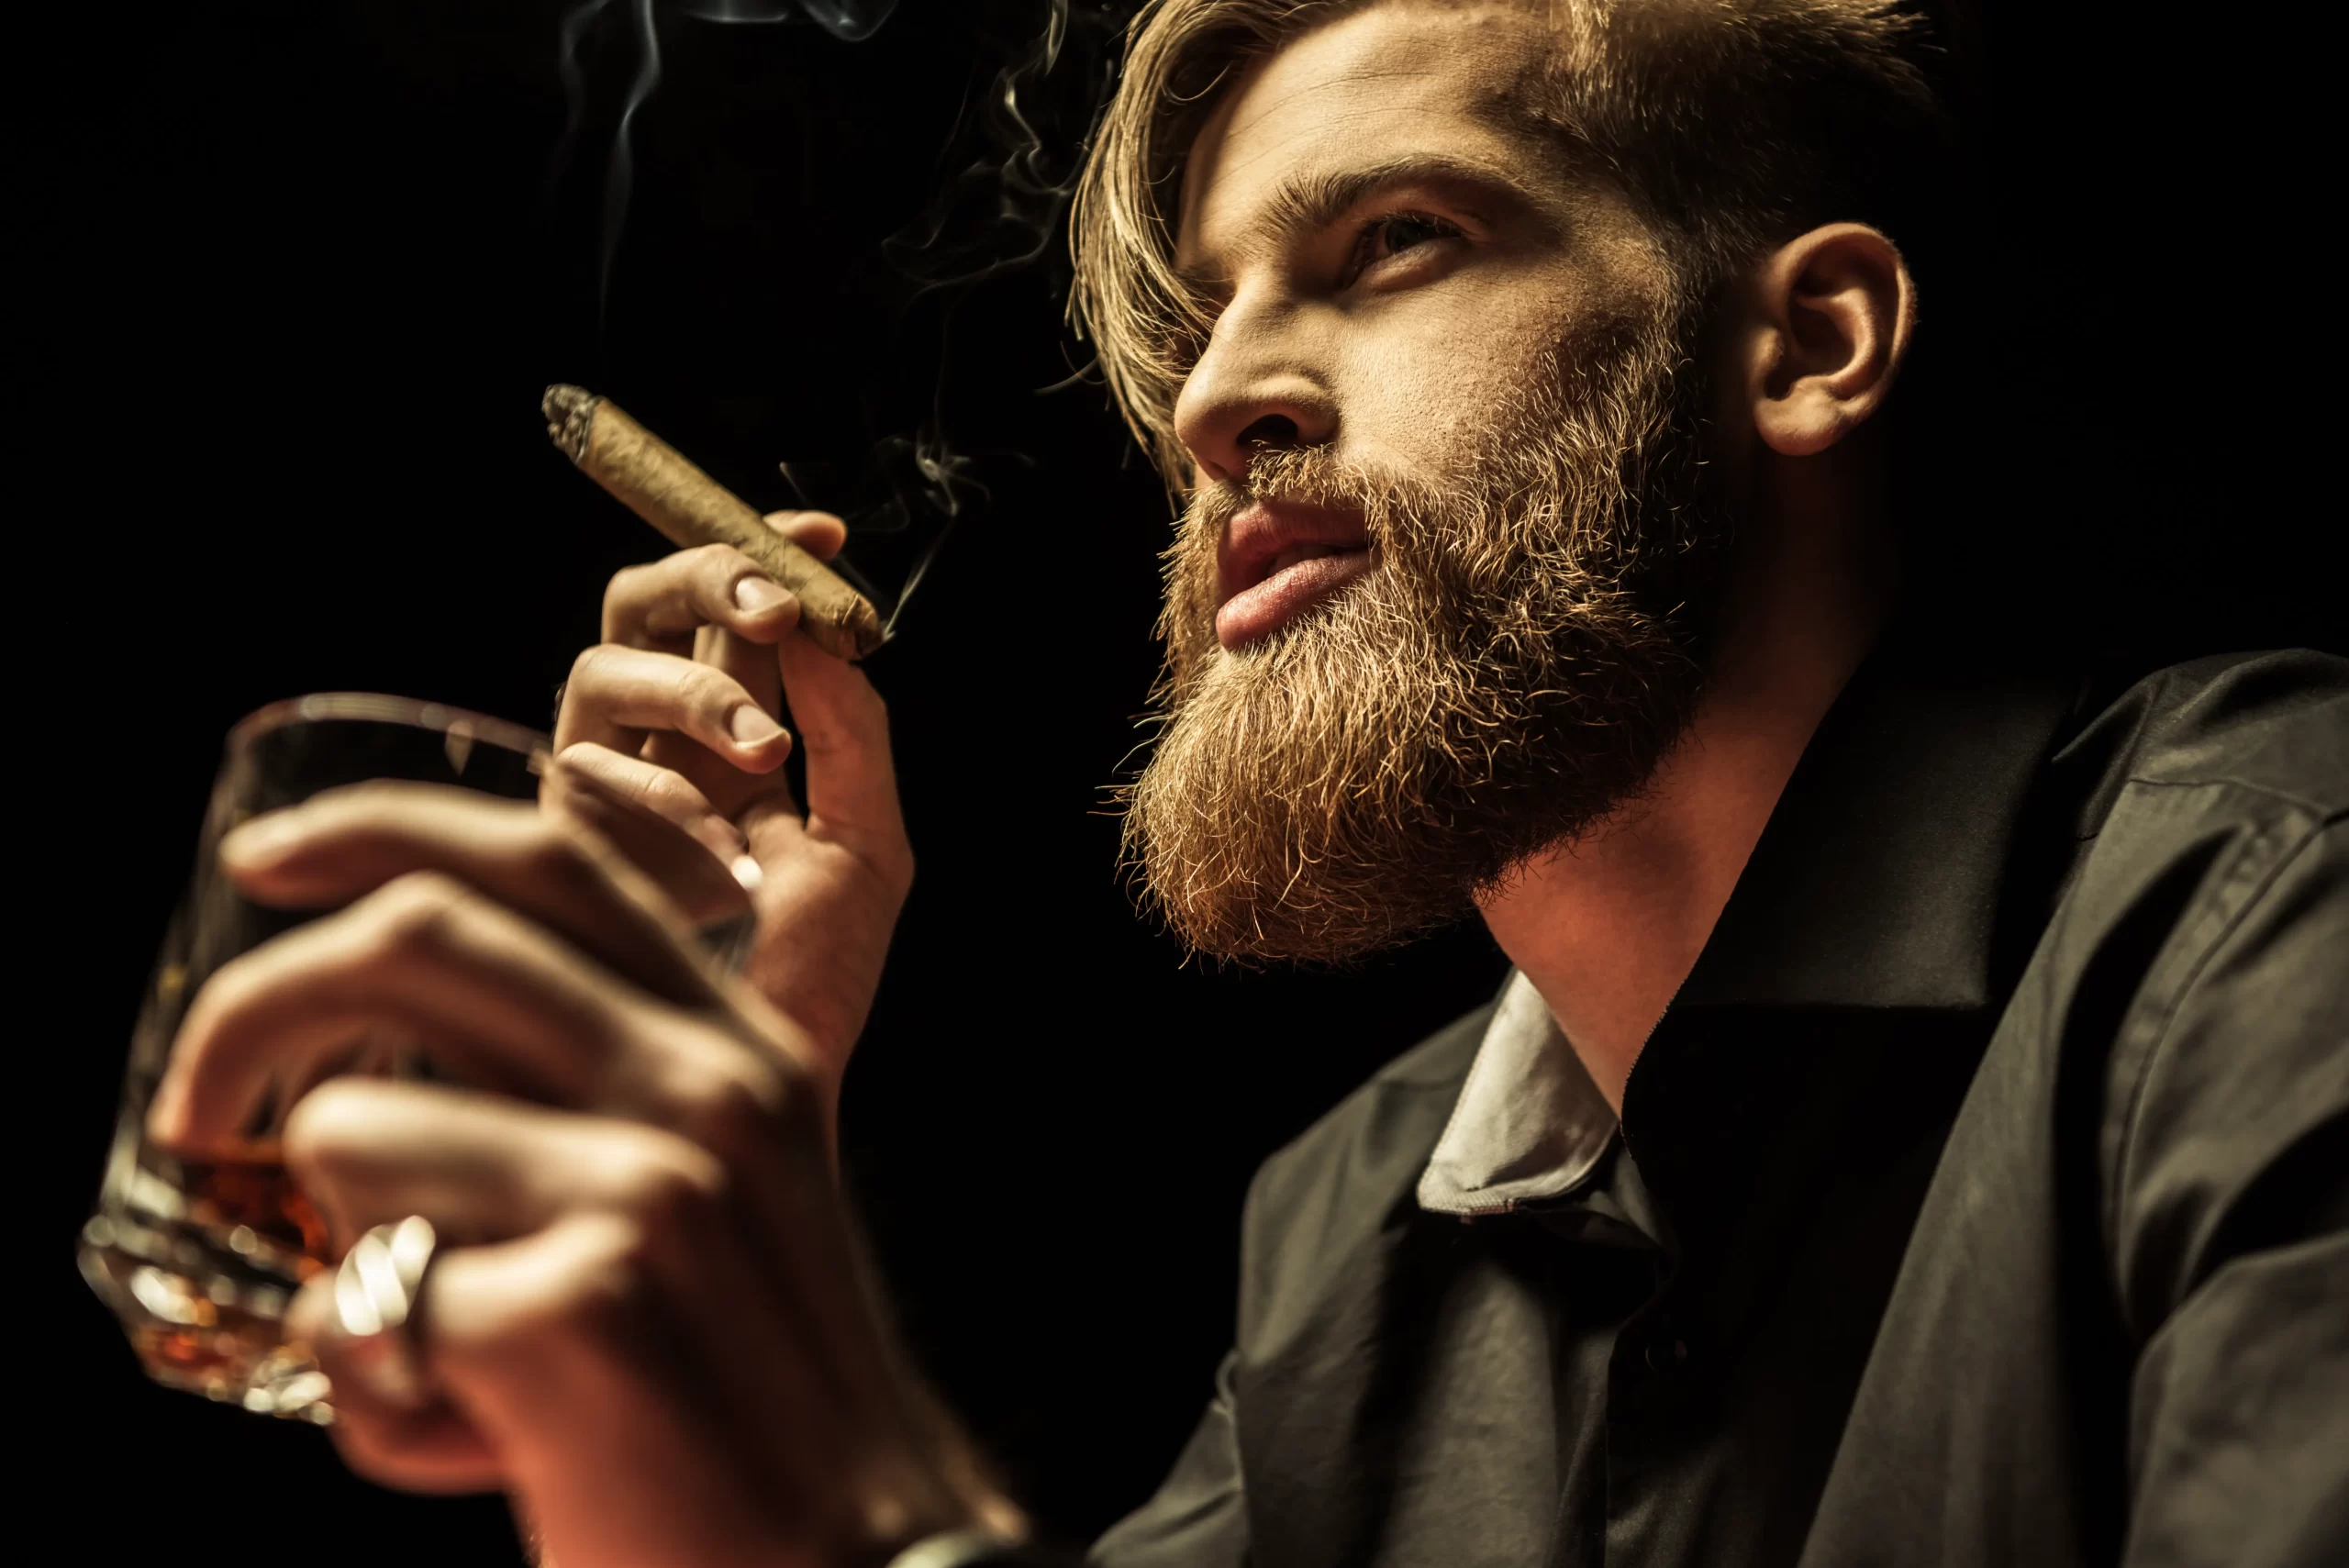 How to smoke a cigar